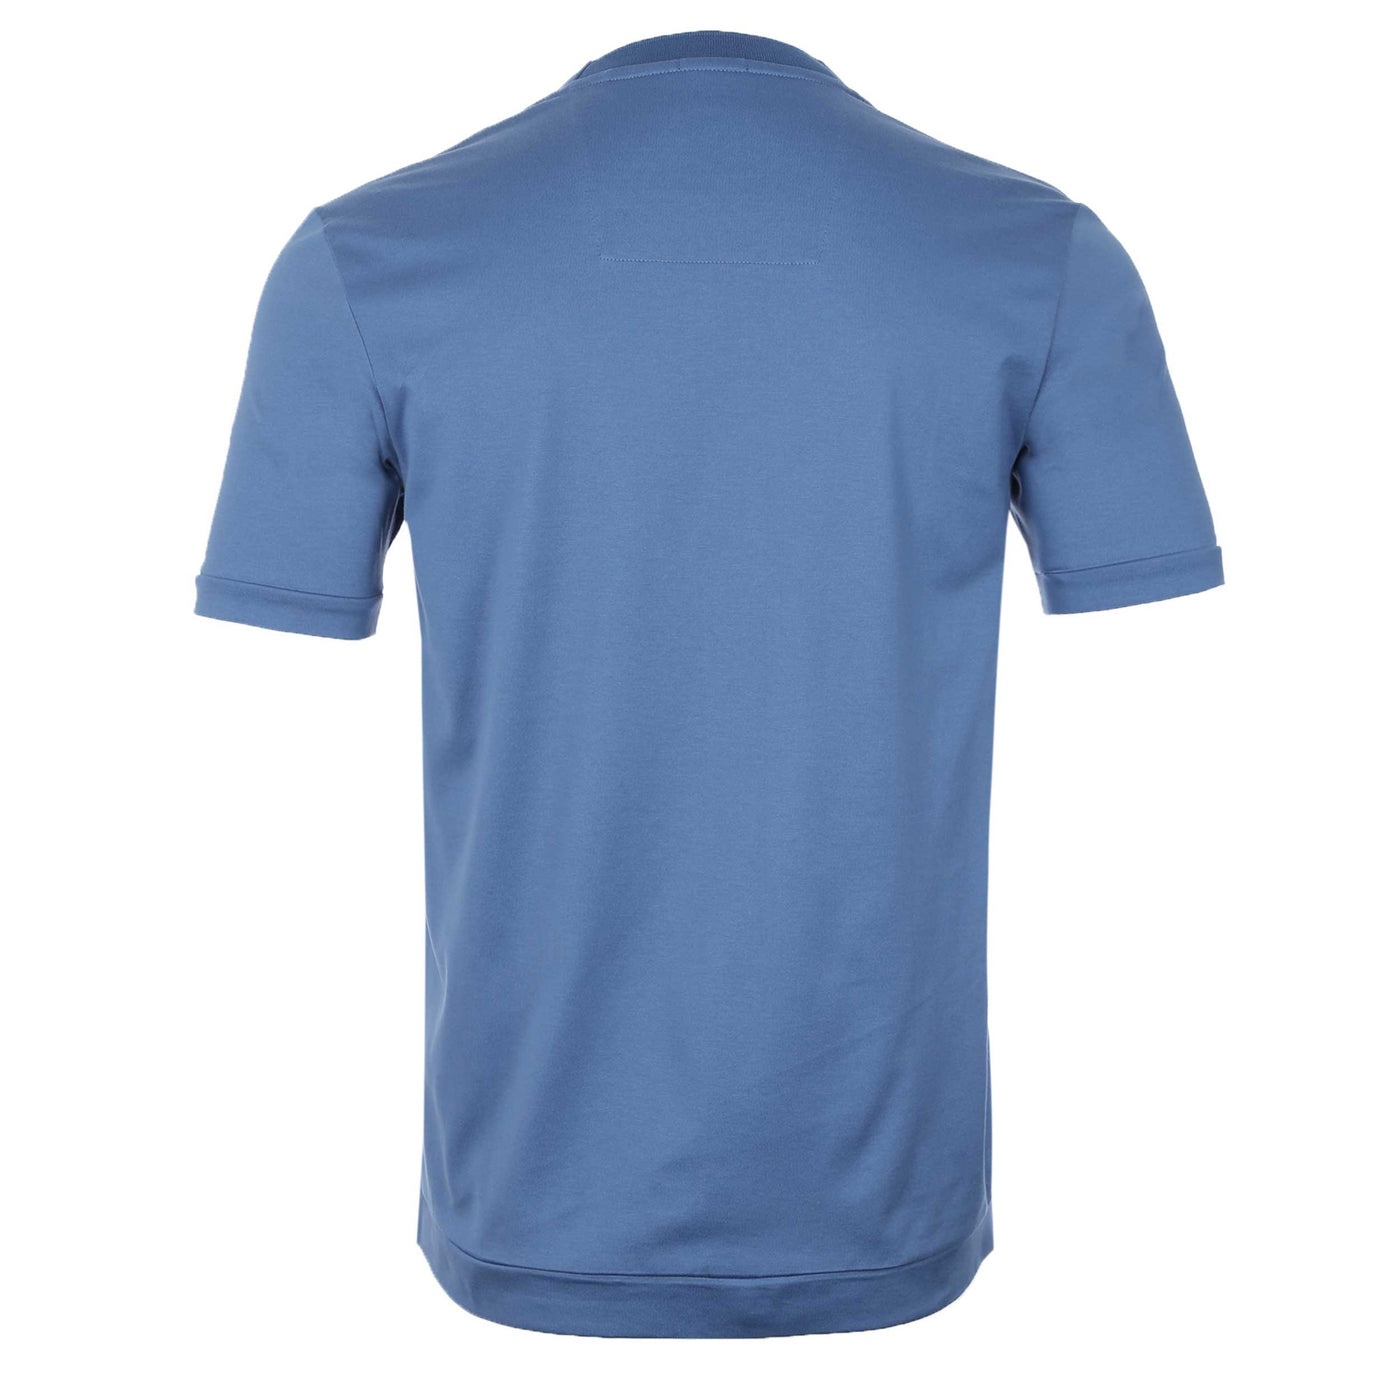 BOSS P Tiburt 425 T Shirt in French Blue Back